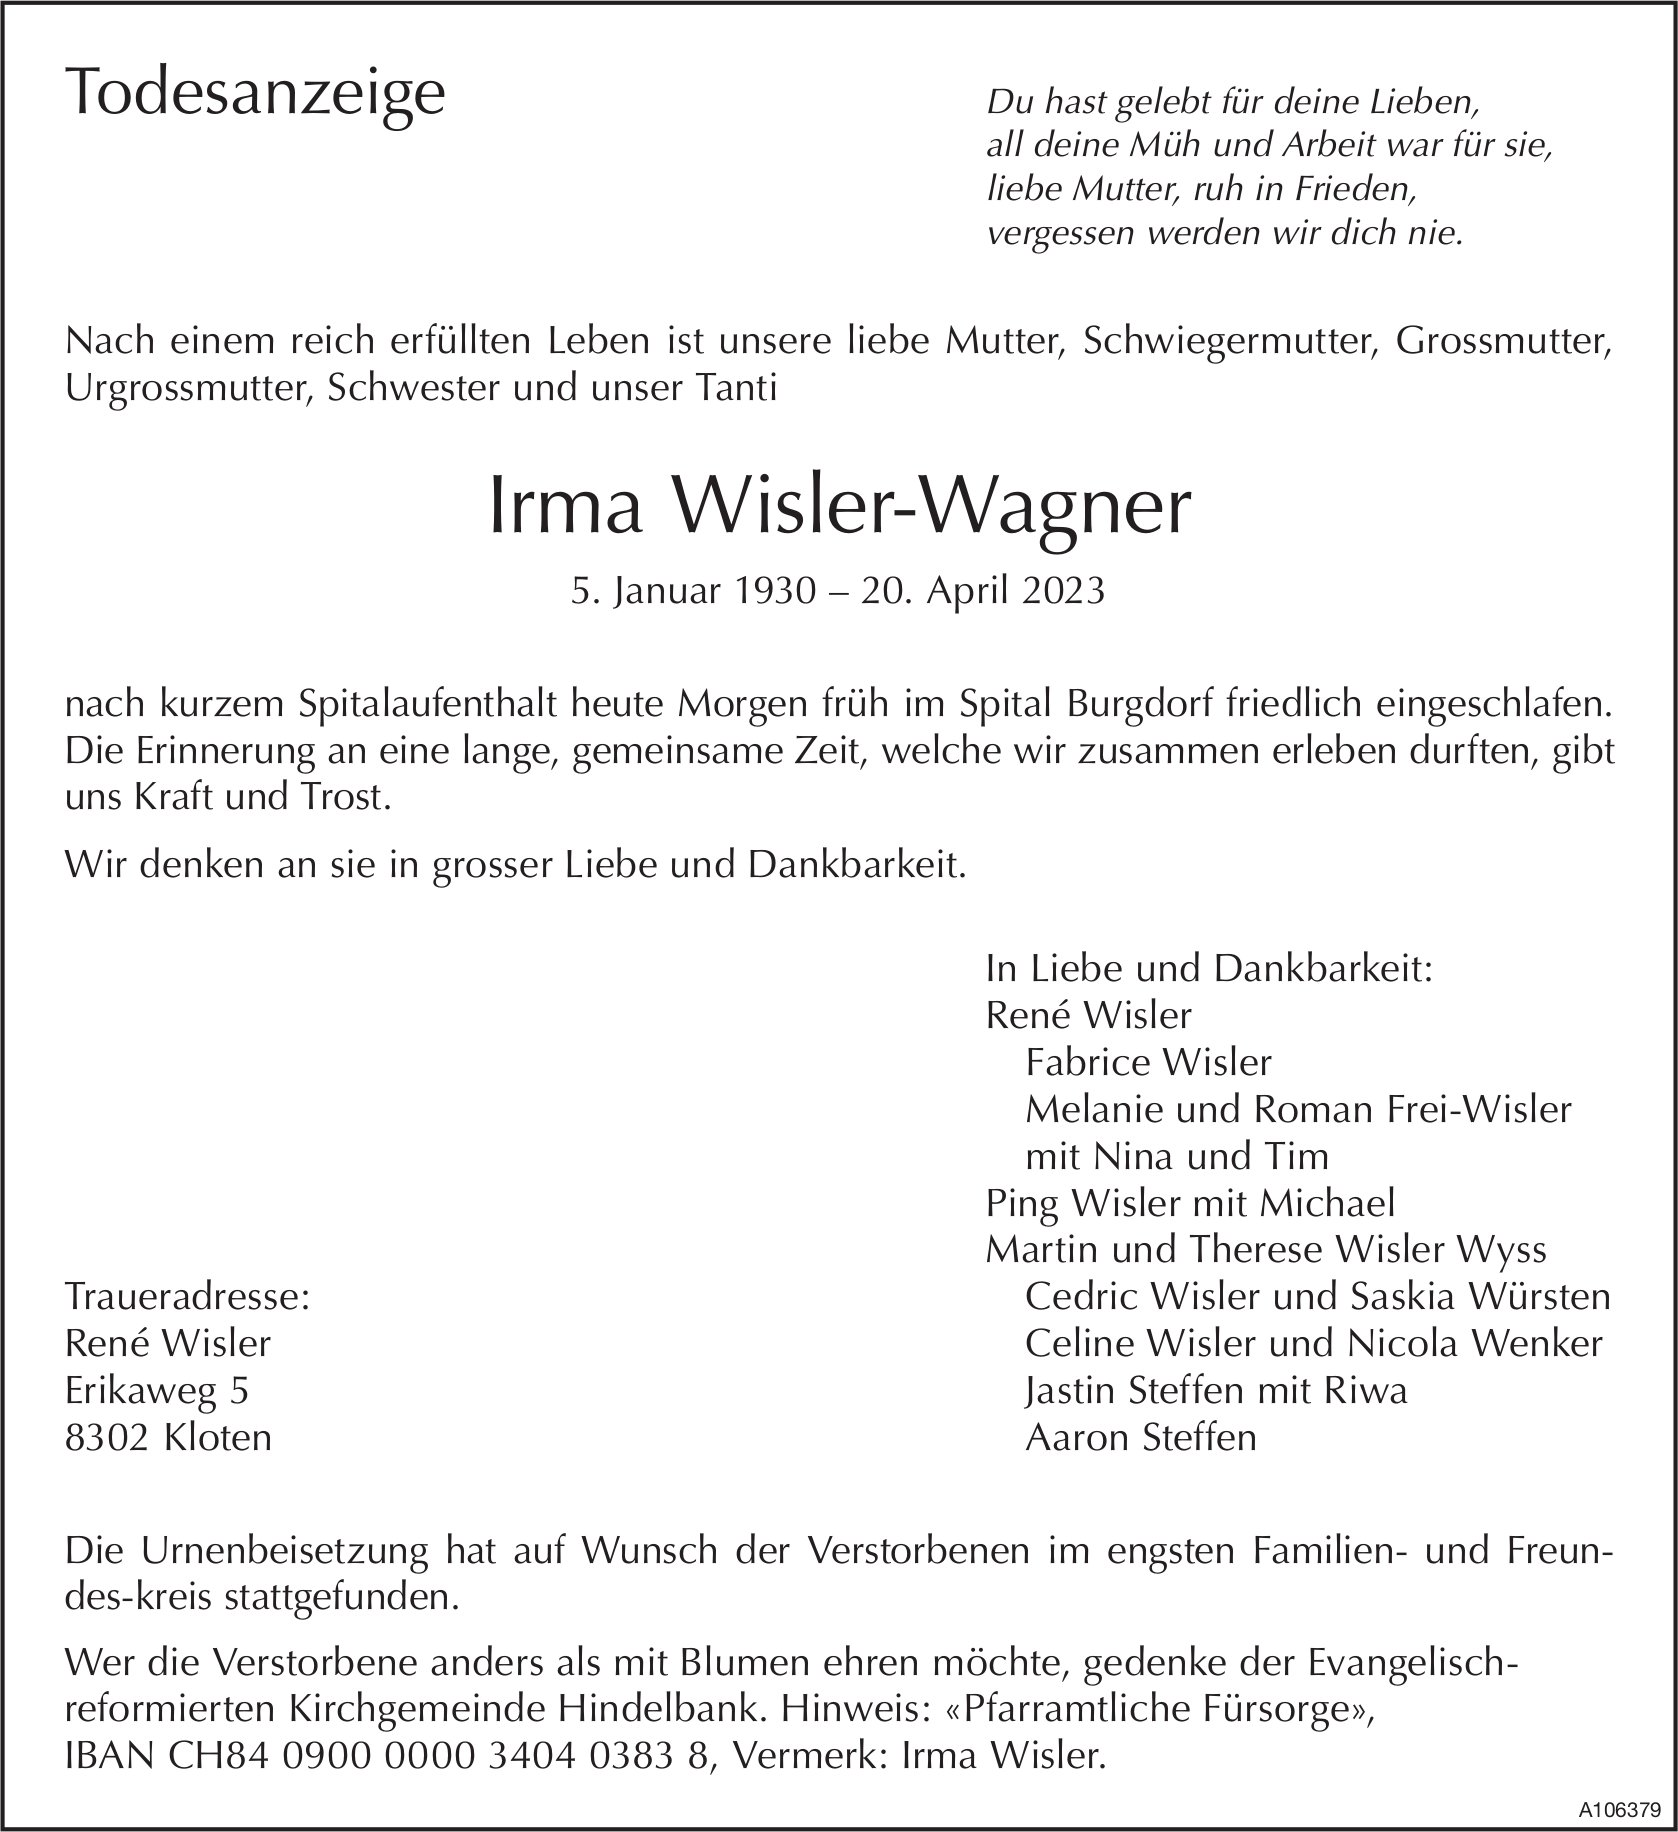 Irma Wisler-Wagner, April 2023 / TA